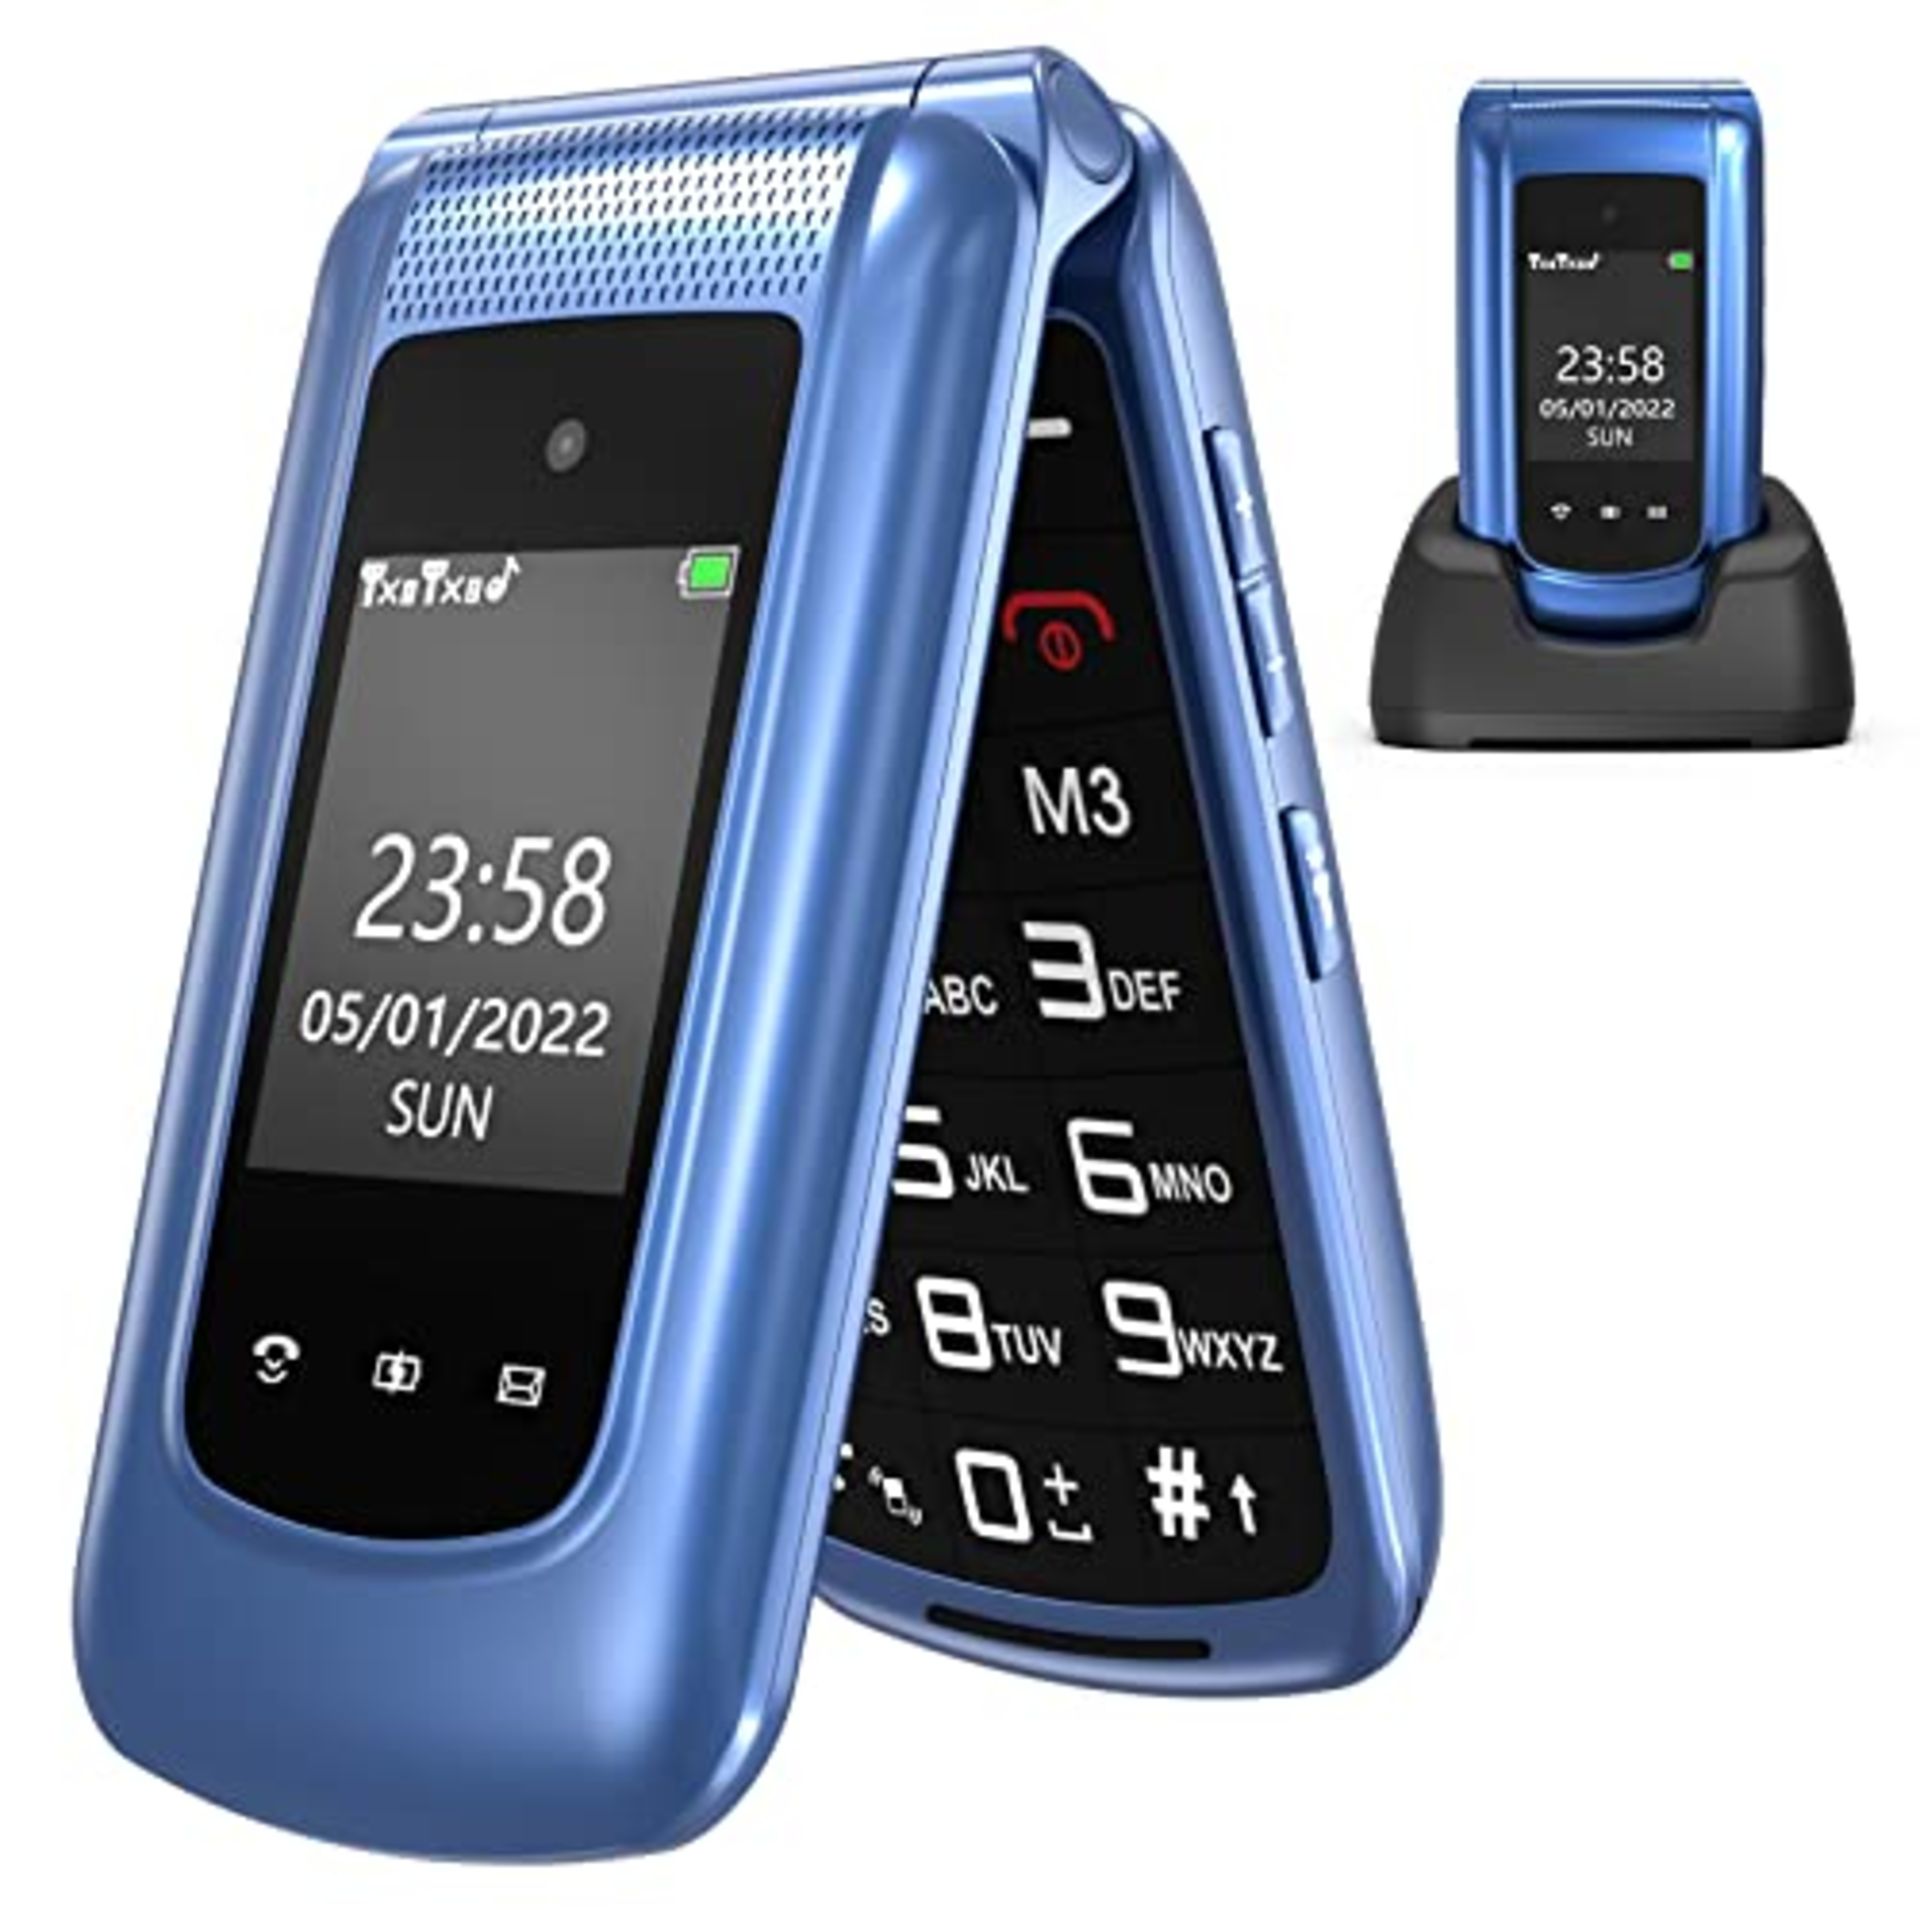 RRP £45.65 CHAKEYAKE 2G Flip Phones Unlocked Sim Free Mobile Phone for Elderly